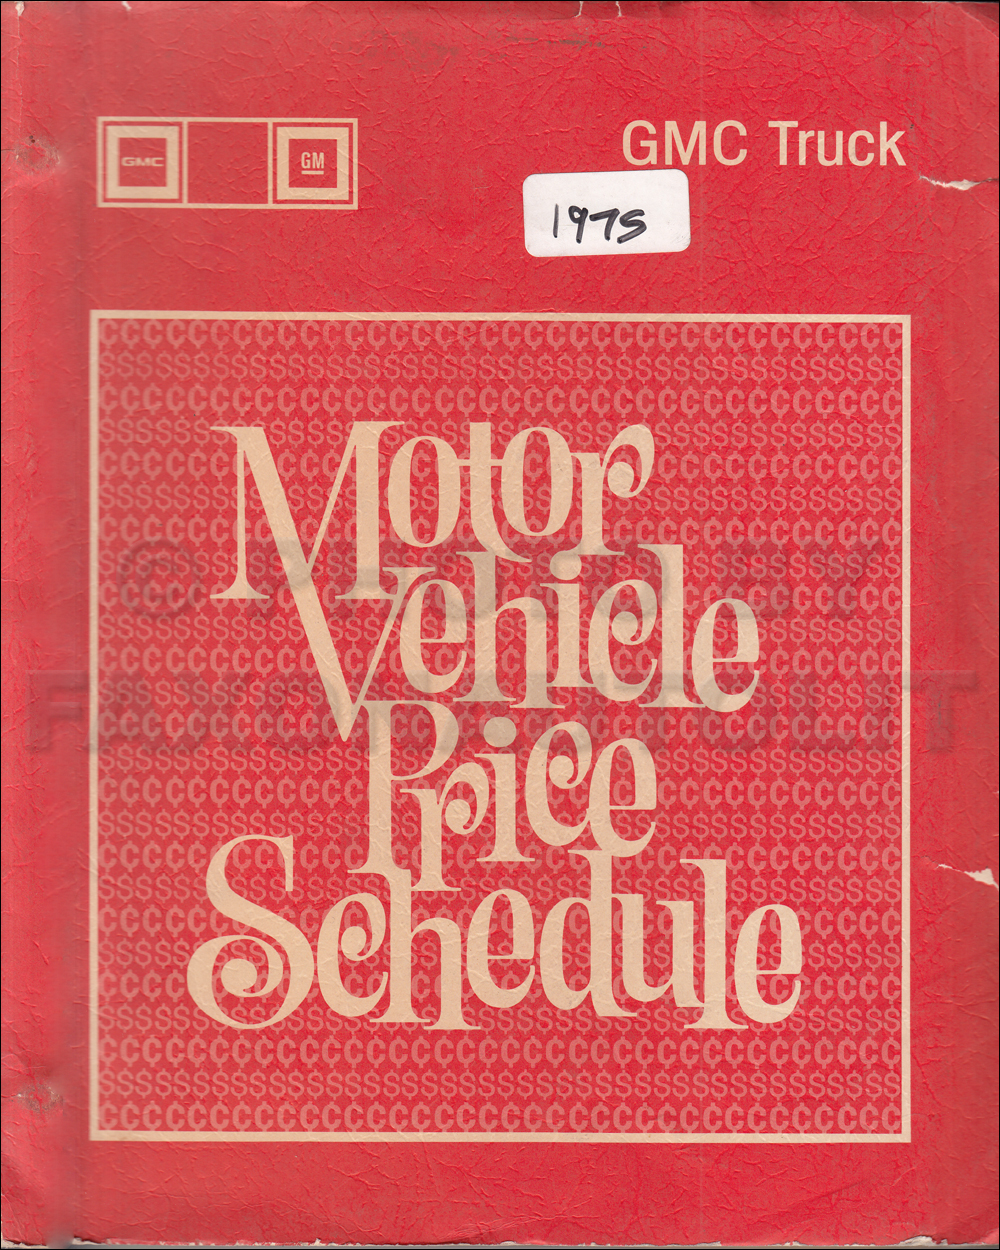 1975 GMC Truck Price Schedule Original